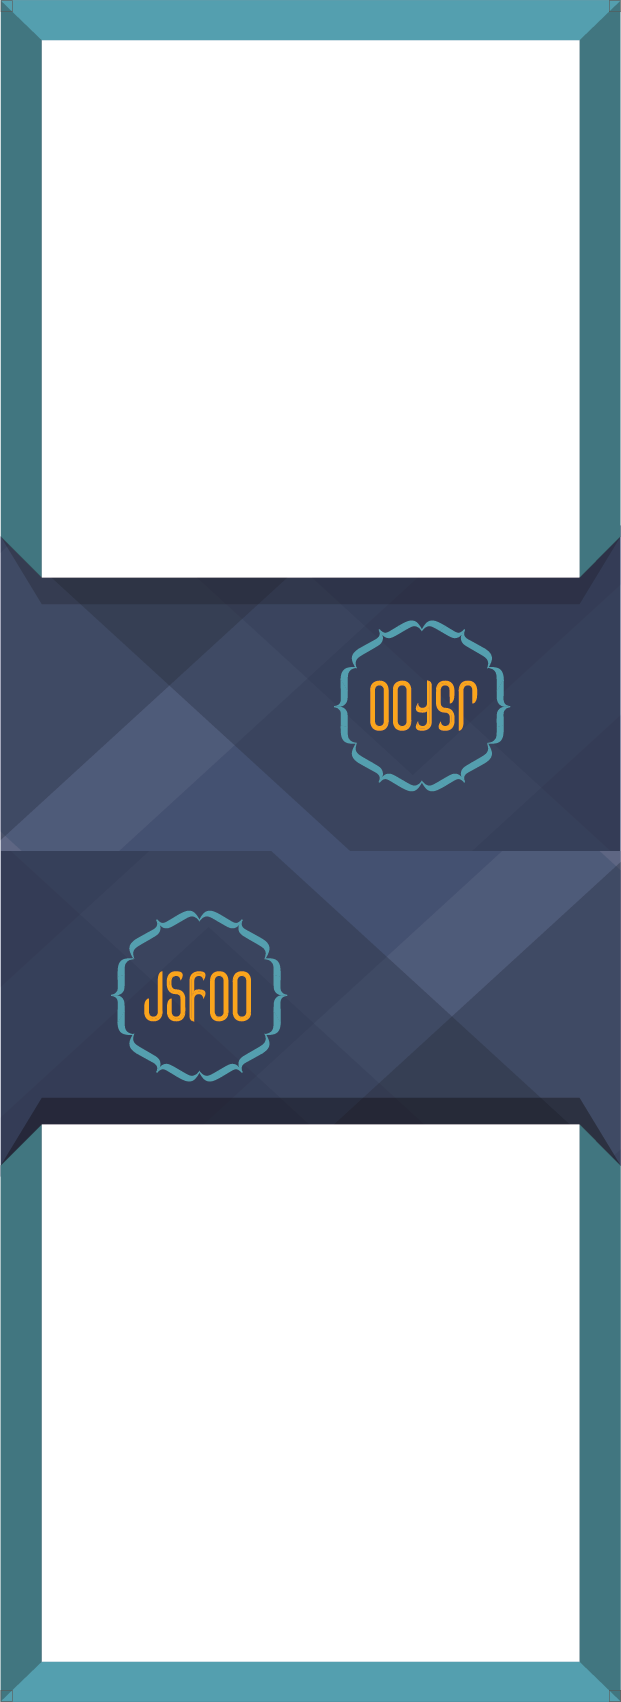 JSFoo_badge-06.png